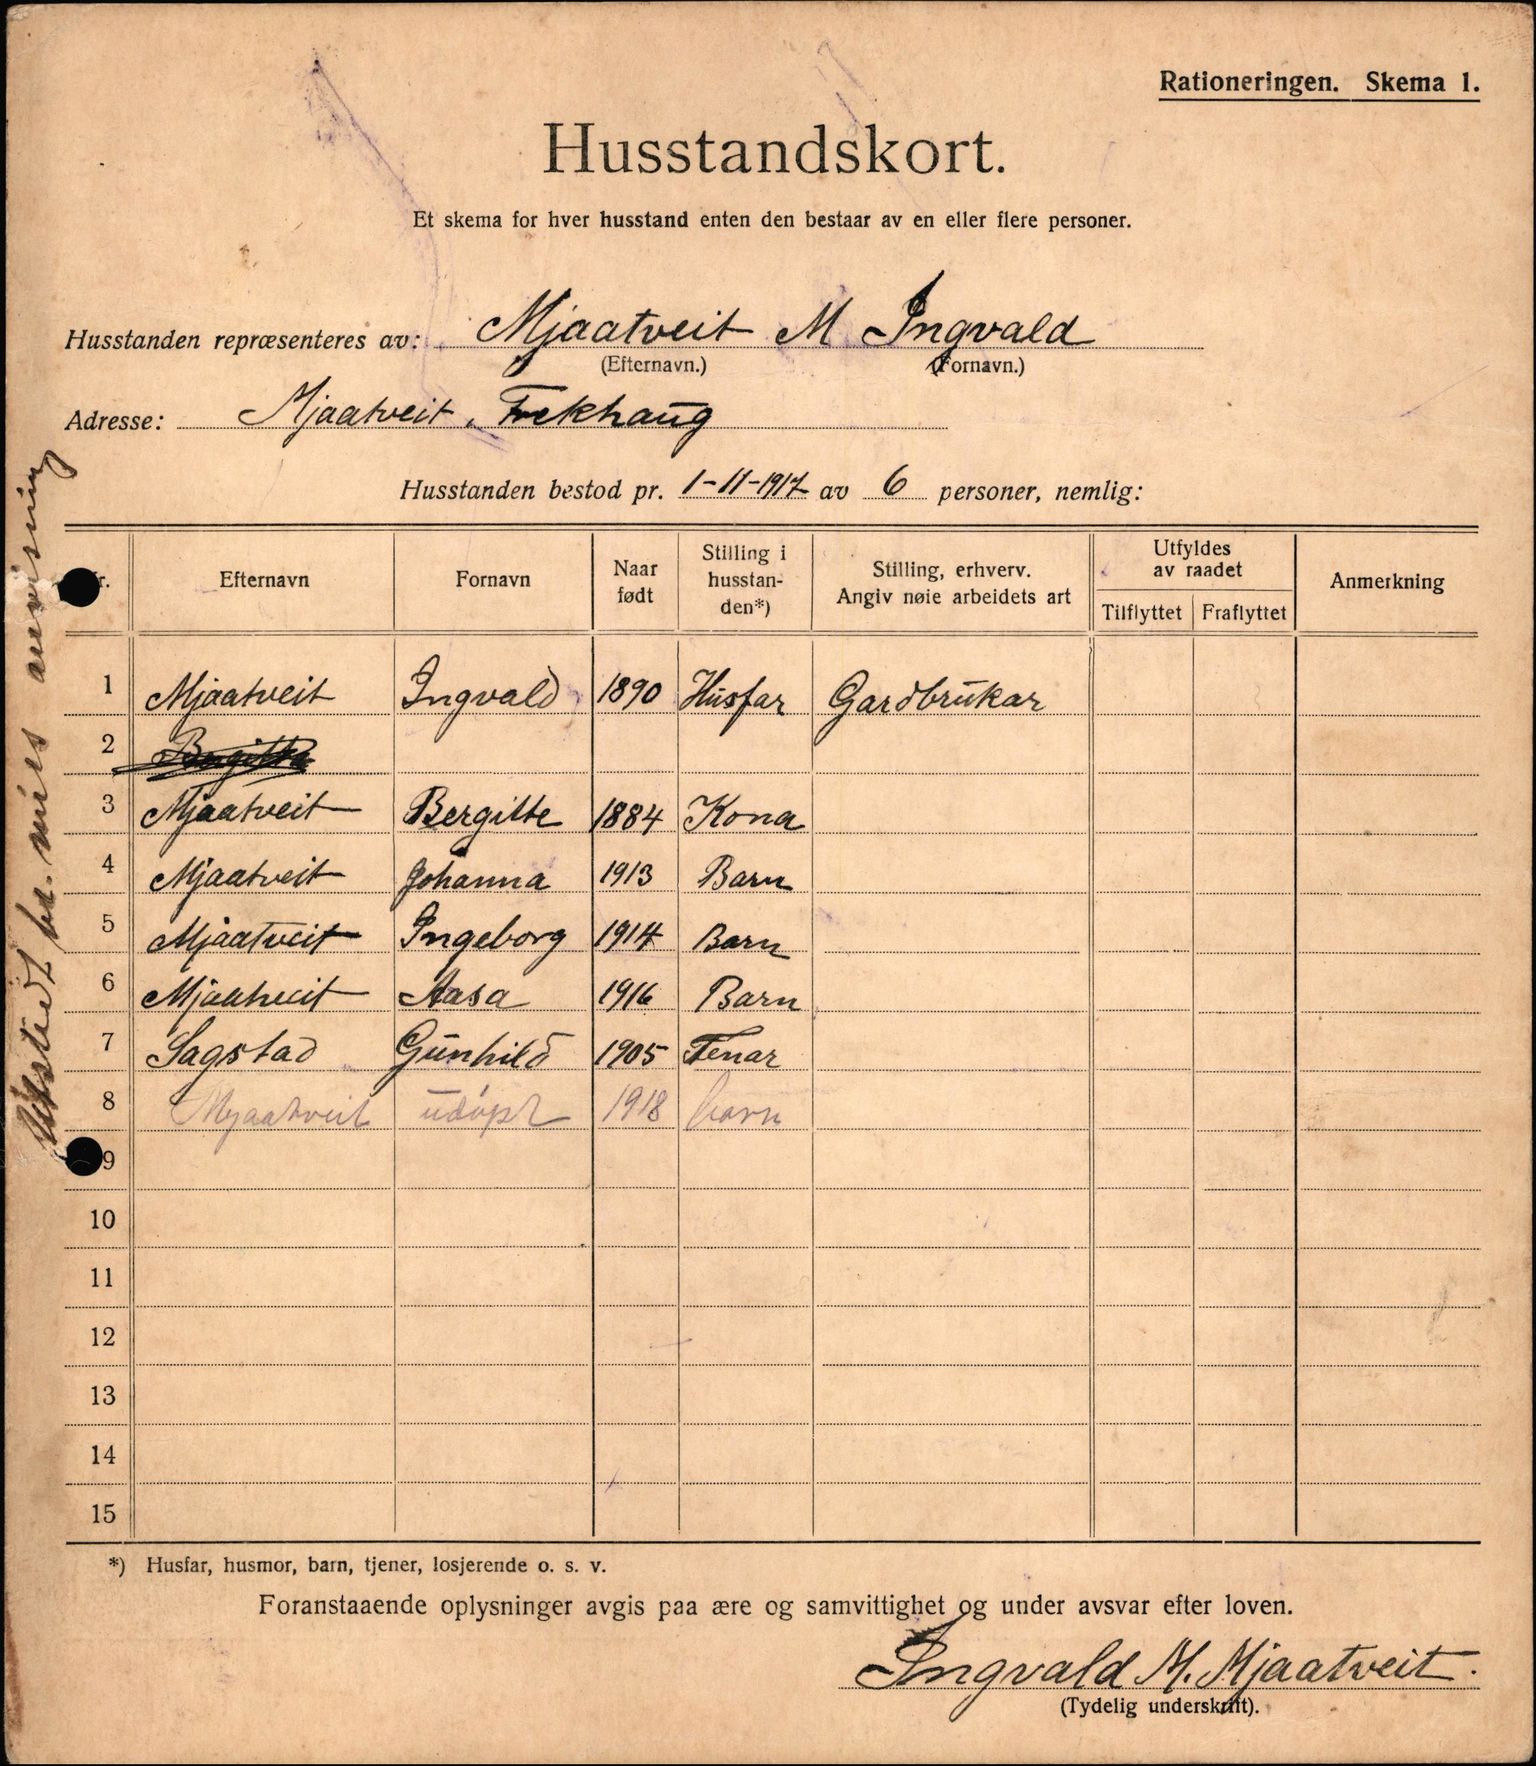 IKAH, Meland kommune, Provianteringsrådet, Husstander per 01.11.1917, 1917-1918, s. 242